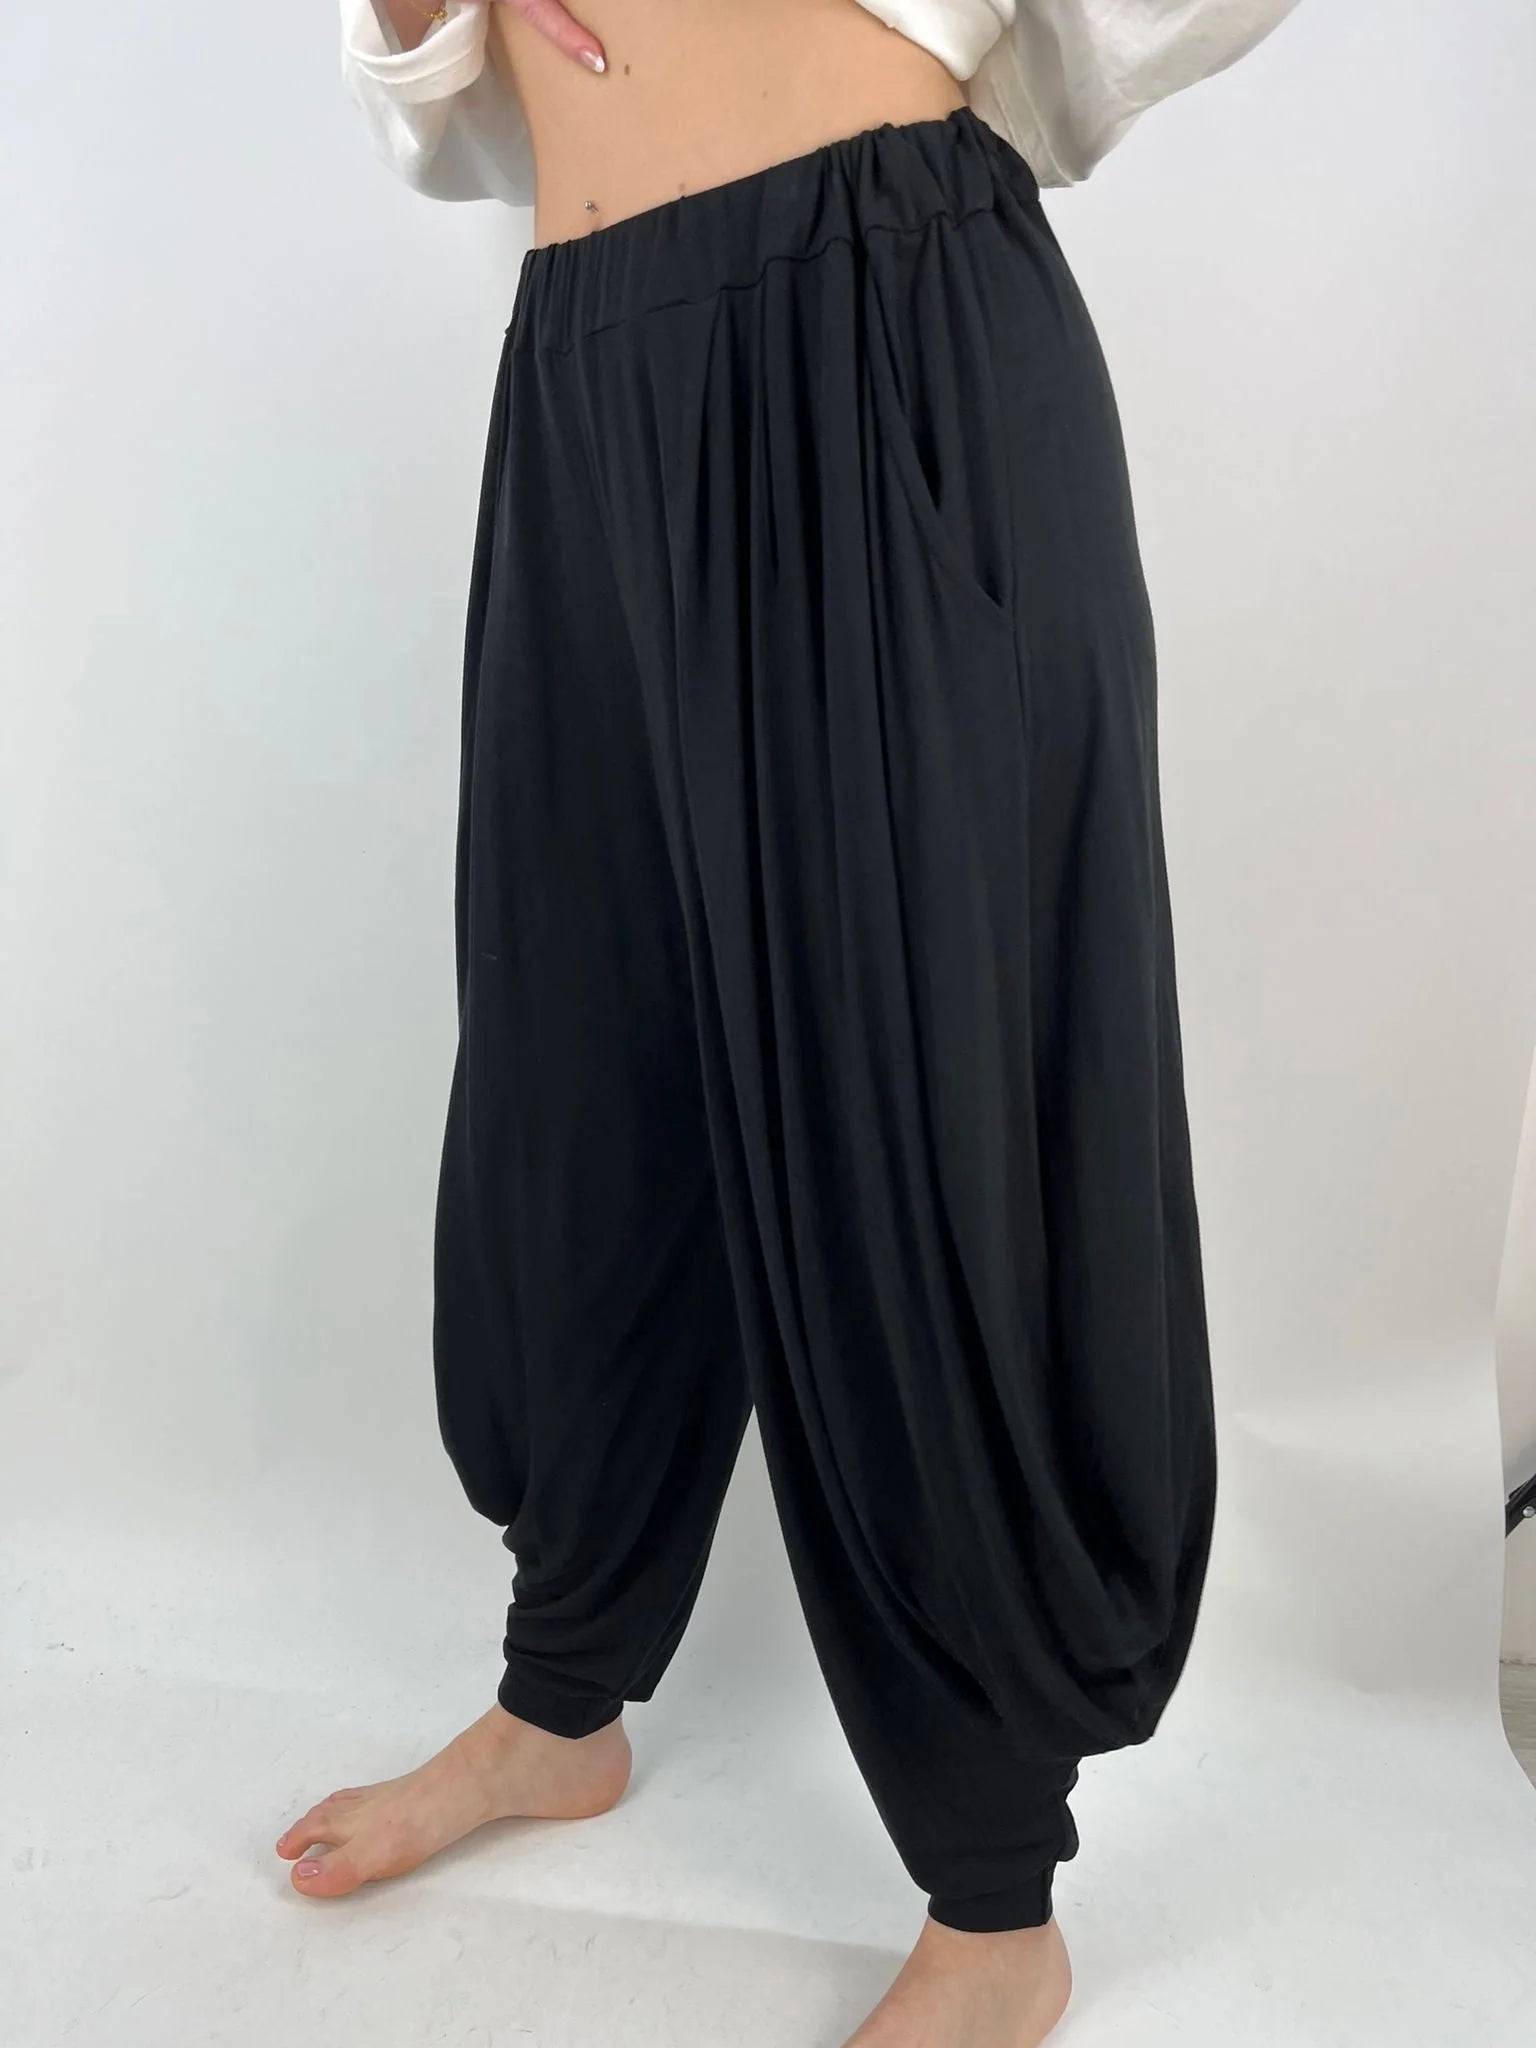 Wholesale Harem Pants - Buy Bulk Harem Ali Baba Trousers Online UK